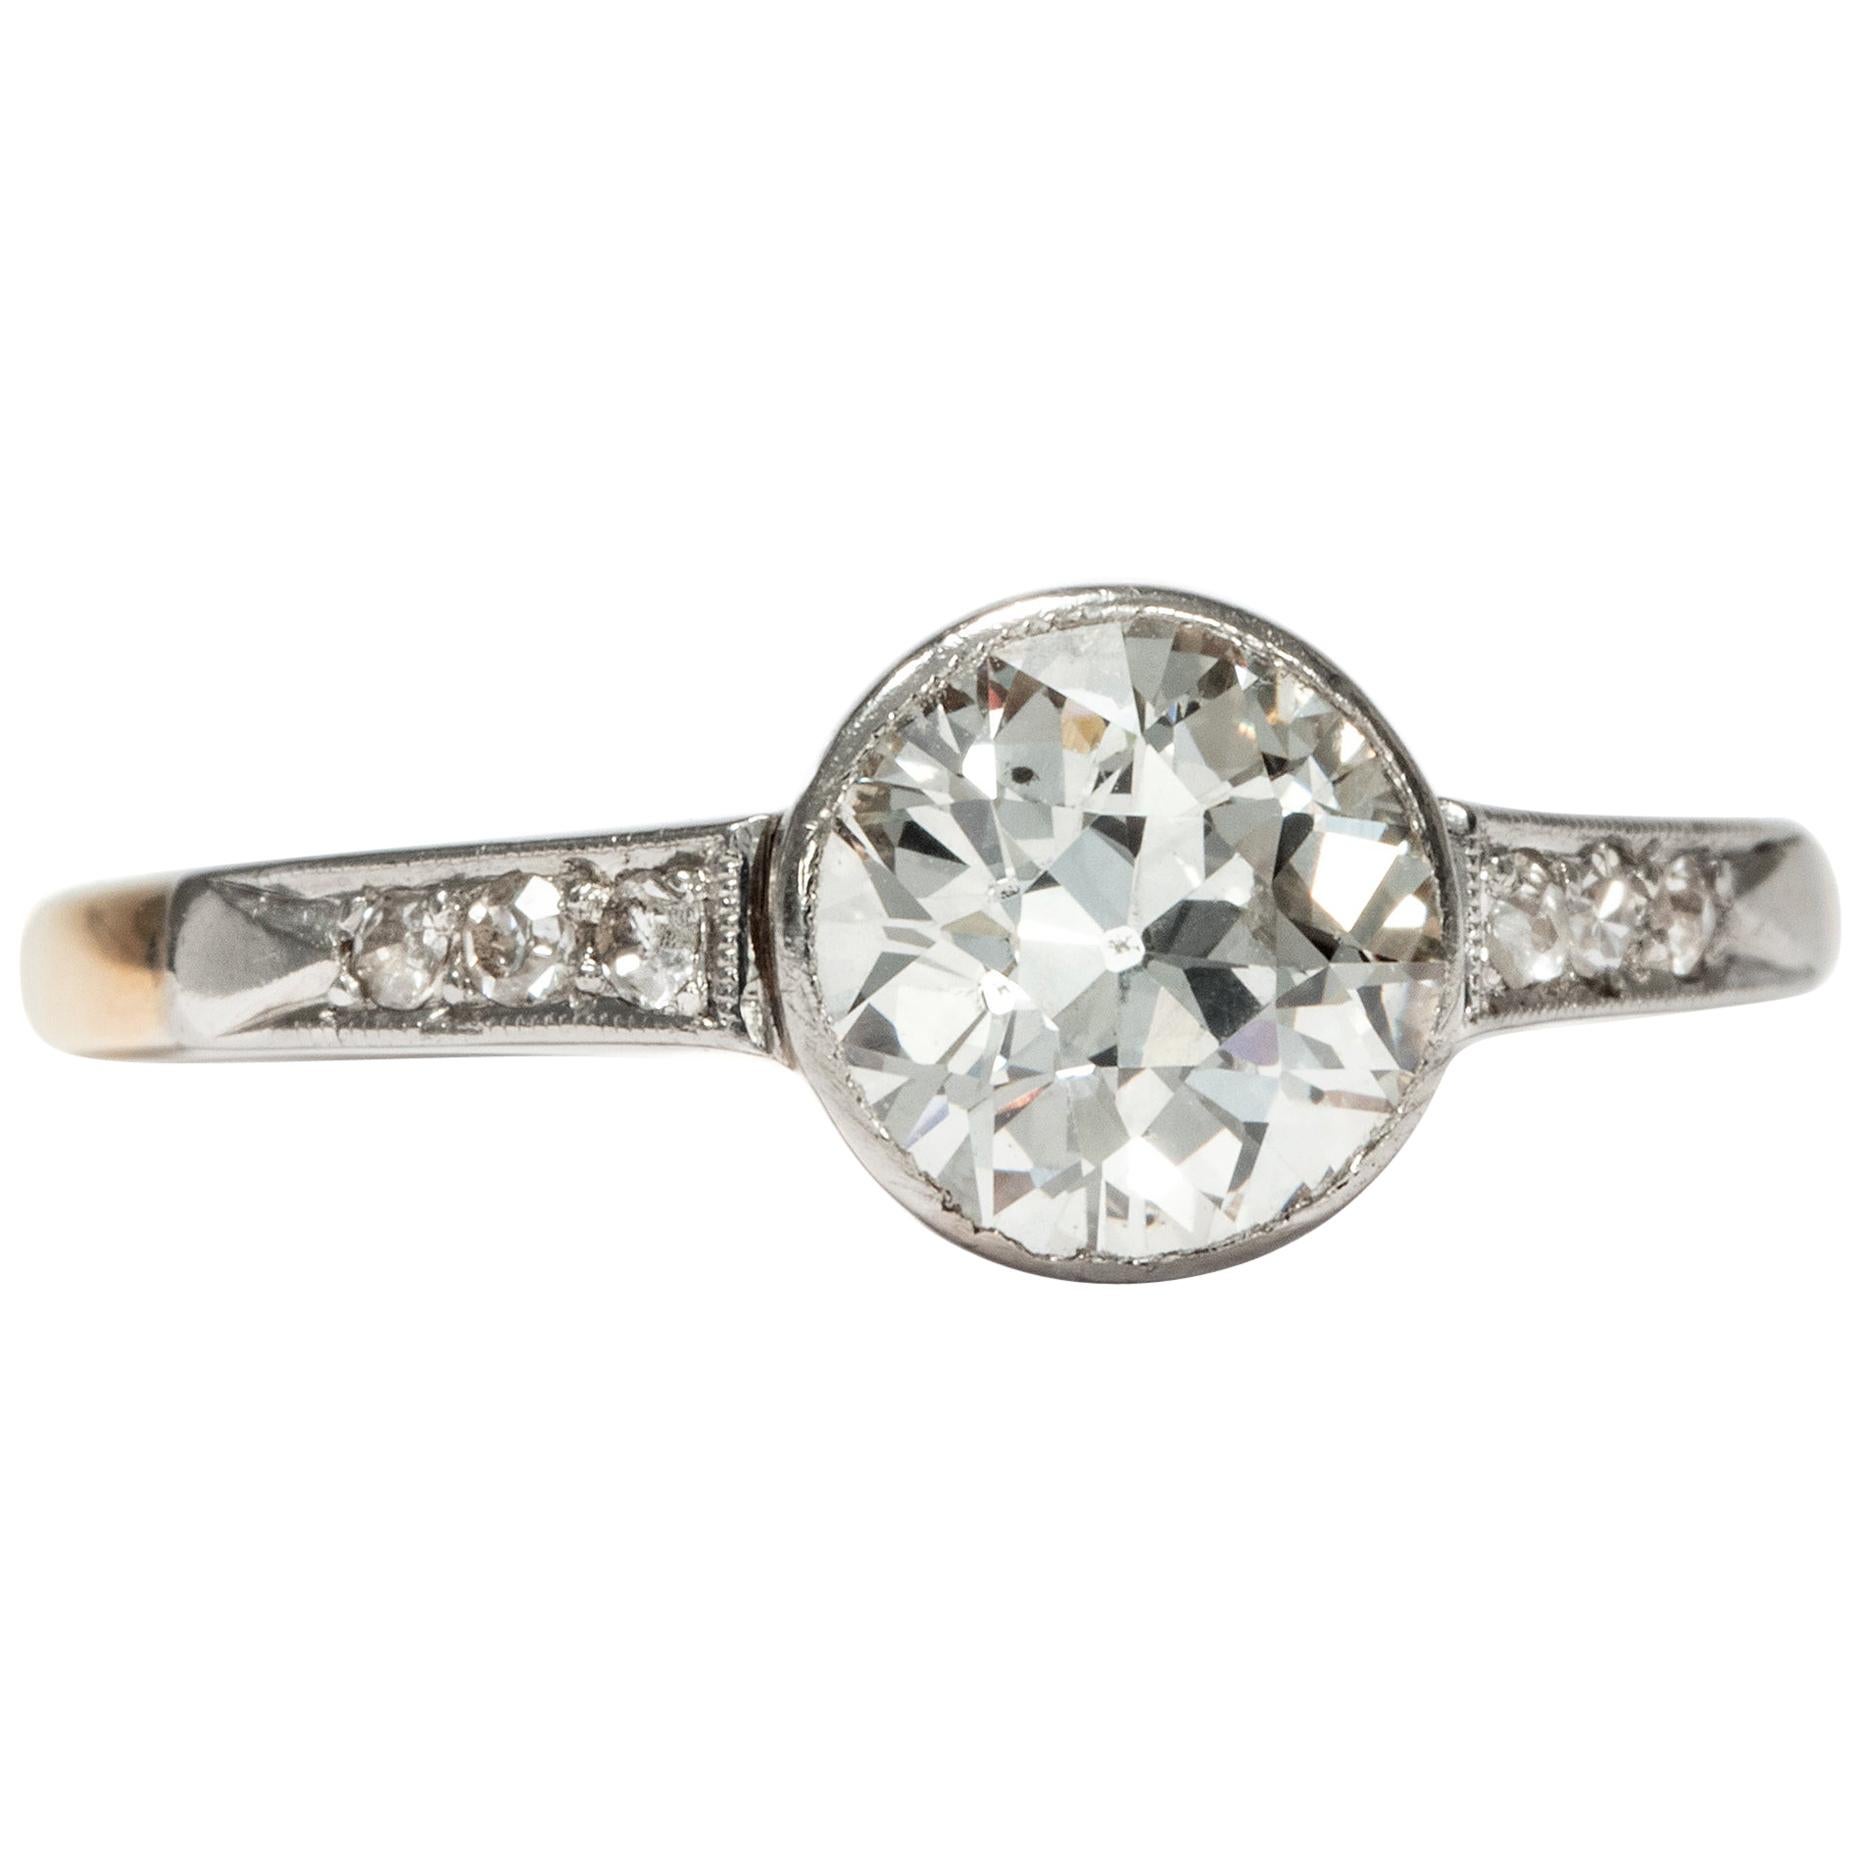 Antique Certified 1.50 Carat Old European Cut Diamond Solitaire Engagement Ring